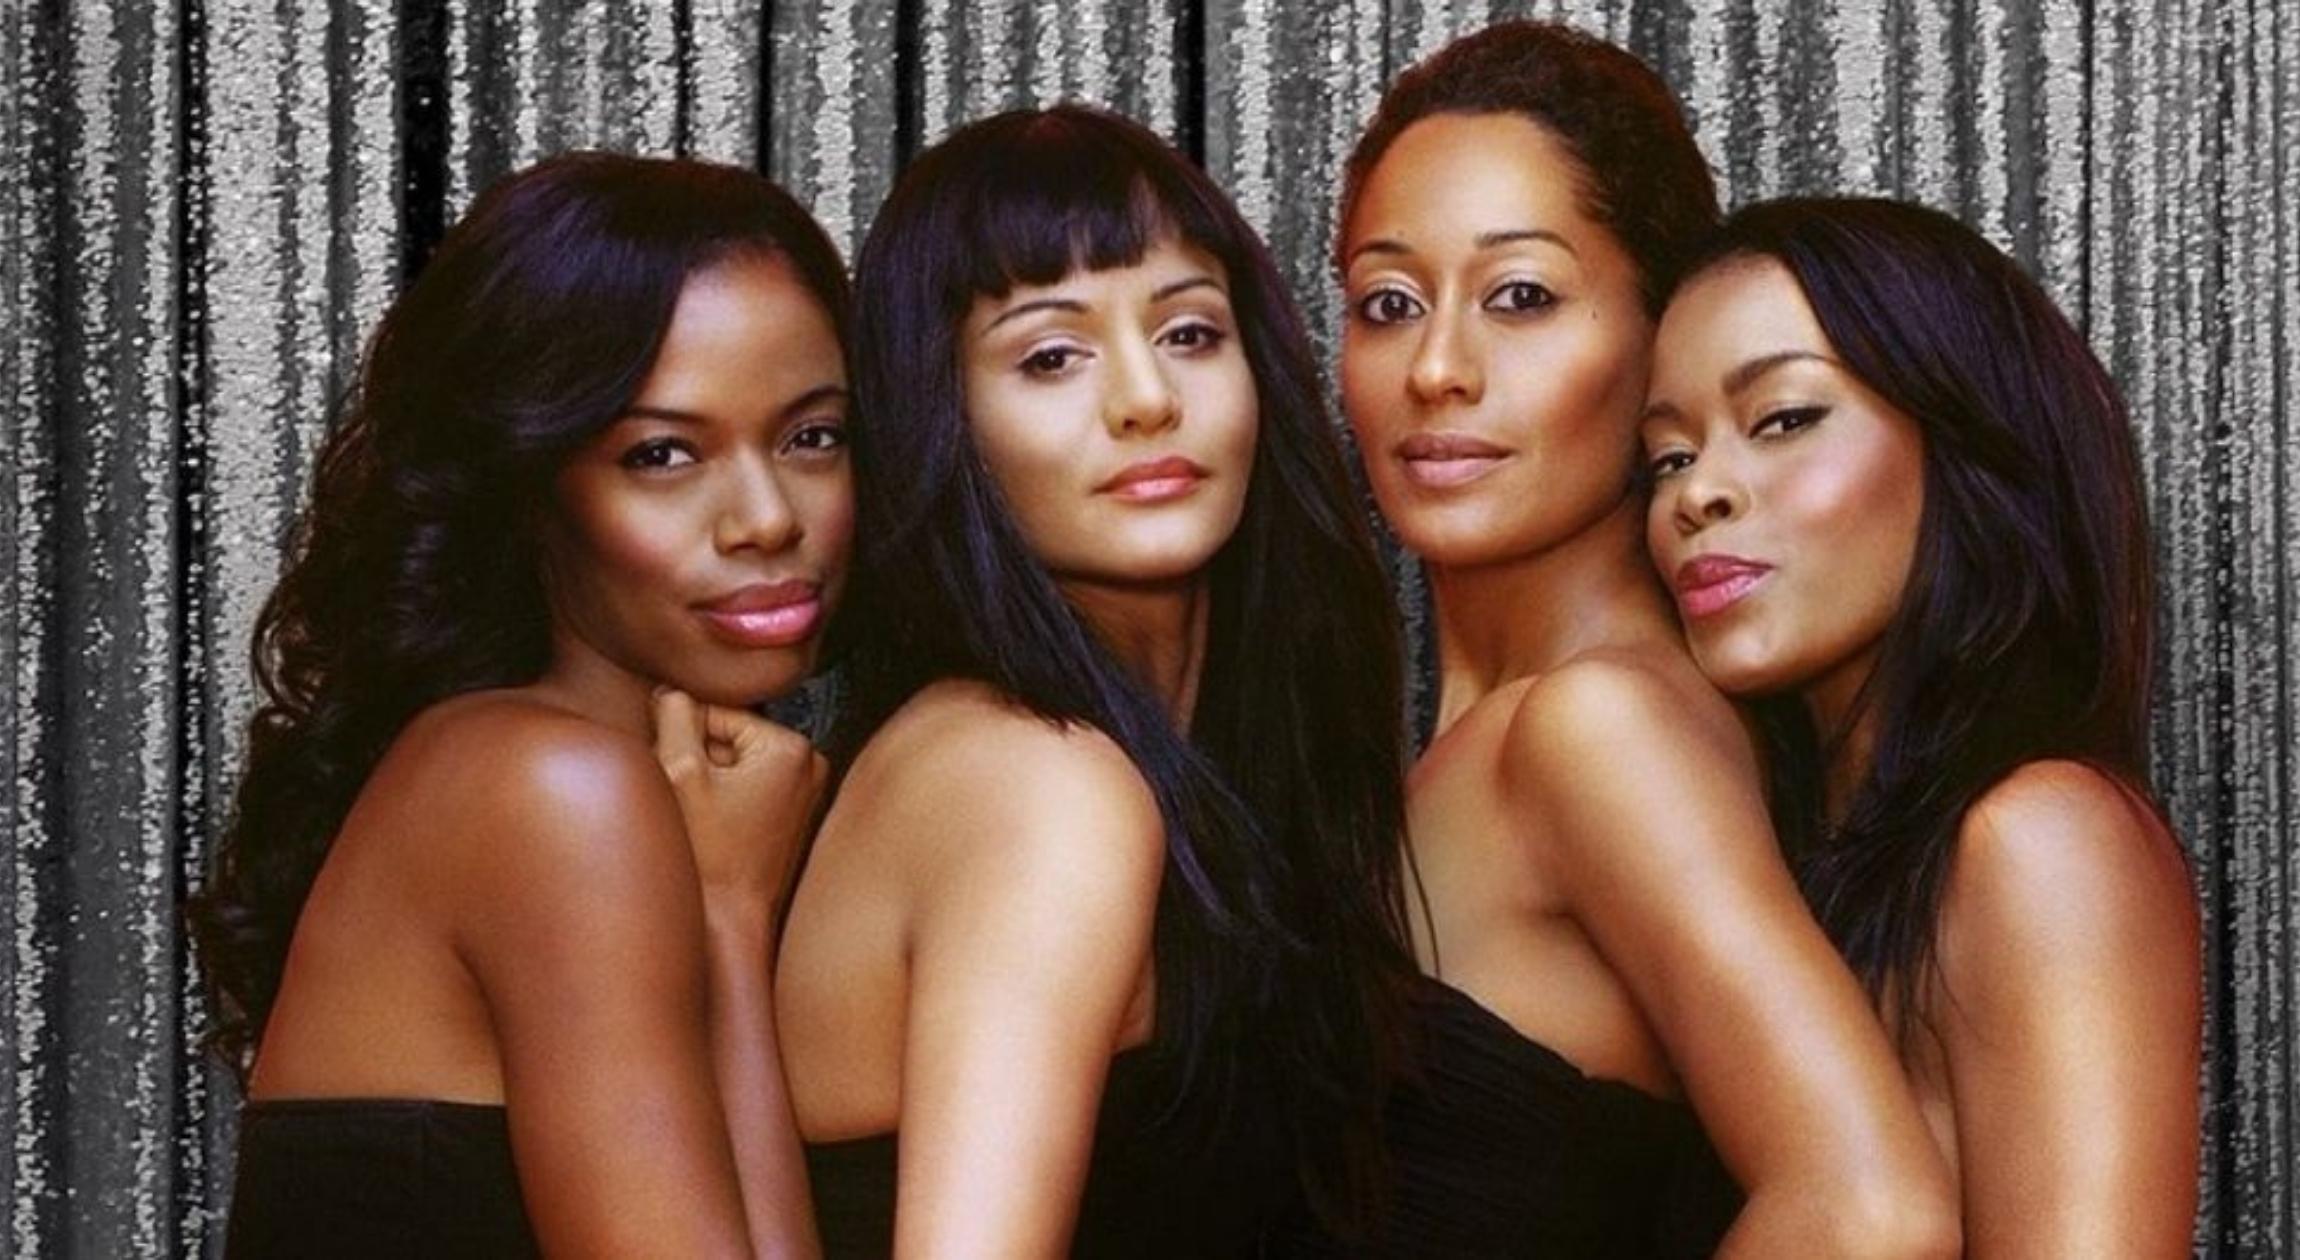 Four Black women